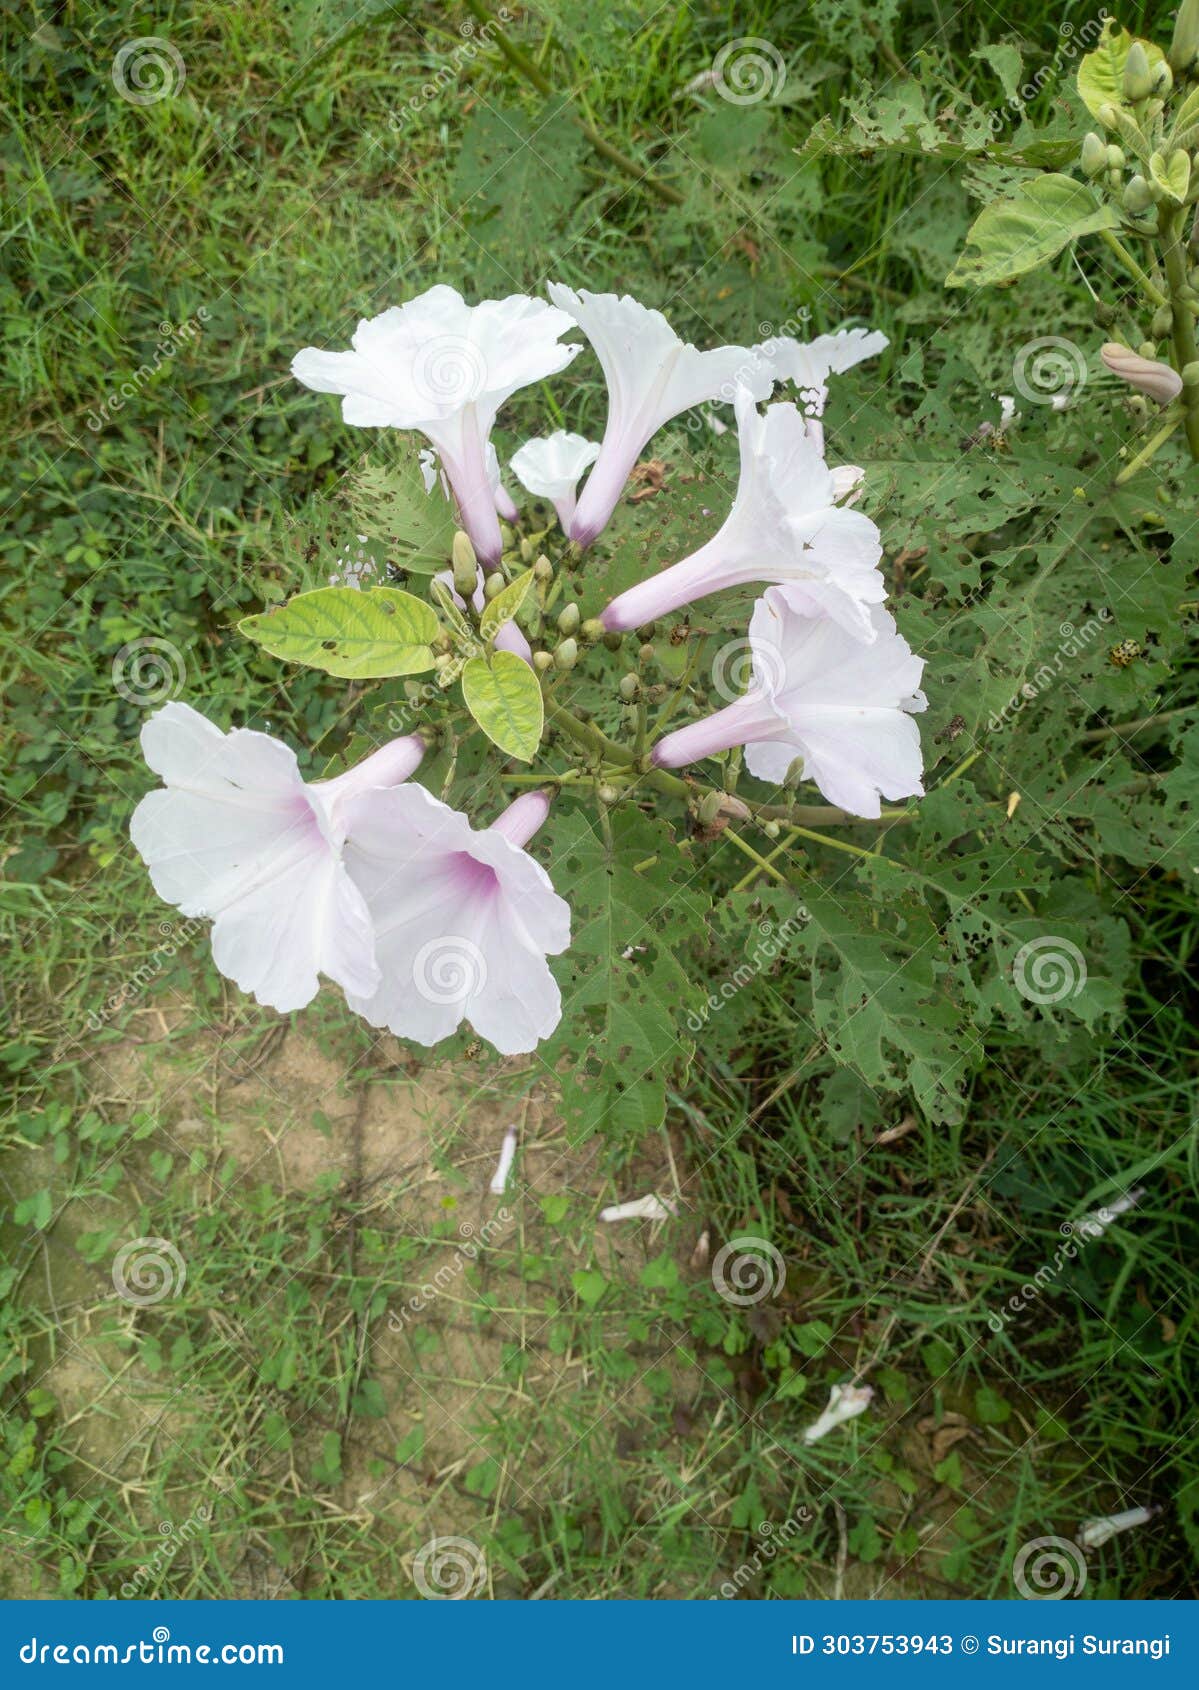 krangkungan flower (ipomoea carnea)